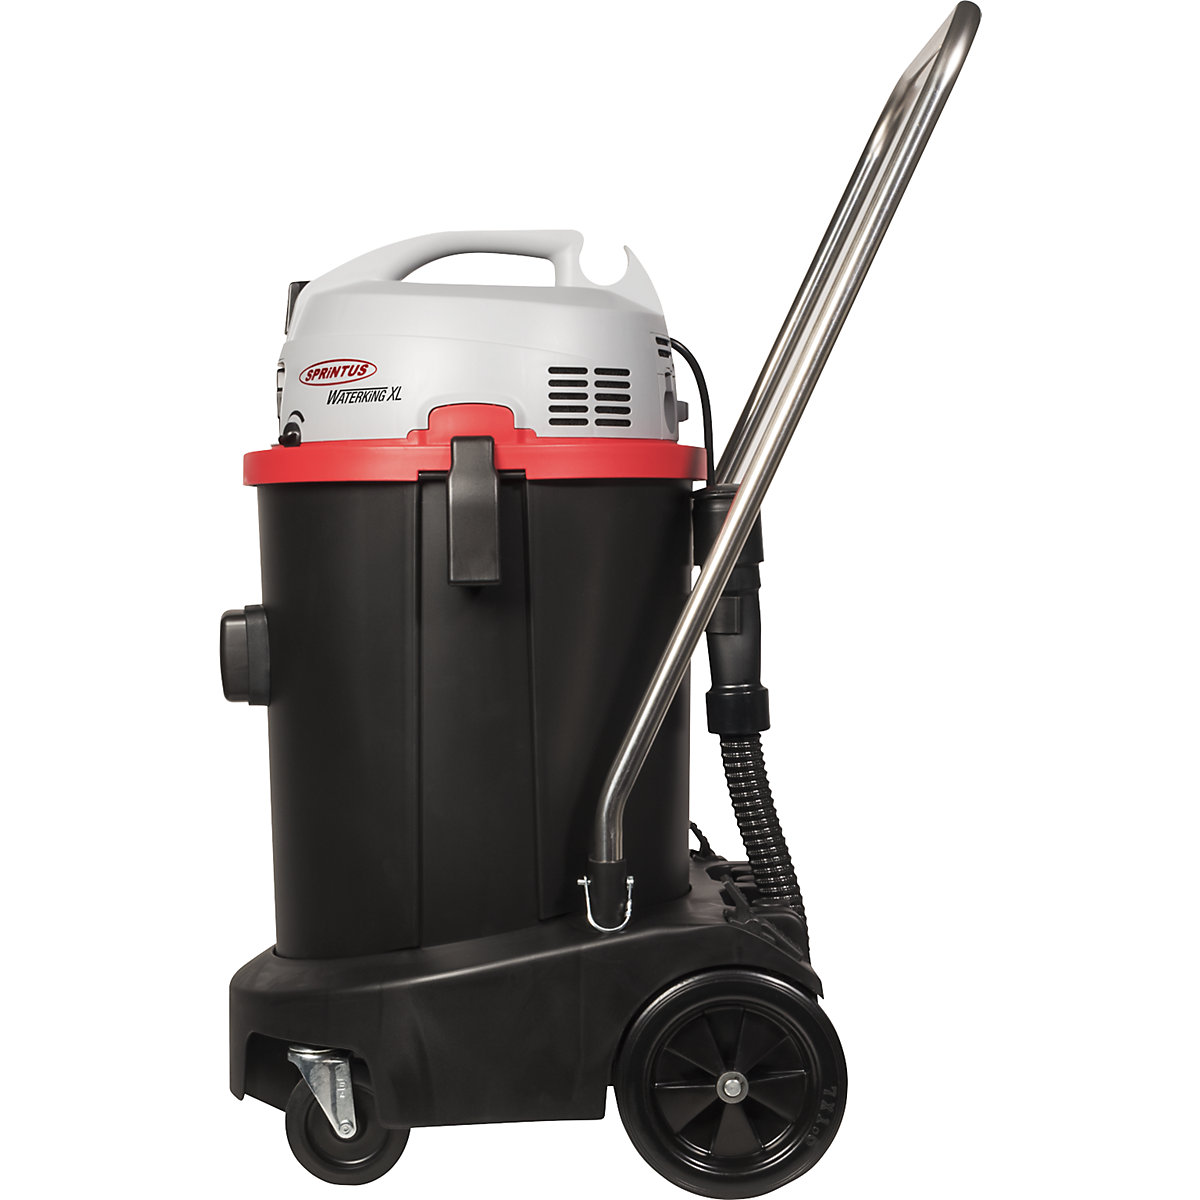 Wet and dry vacuum cleaner - Sprintus